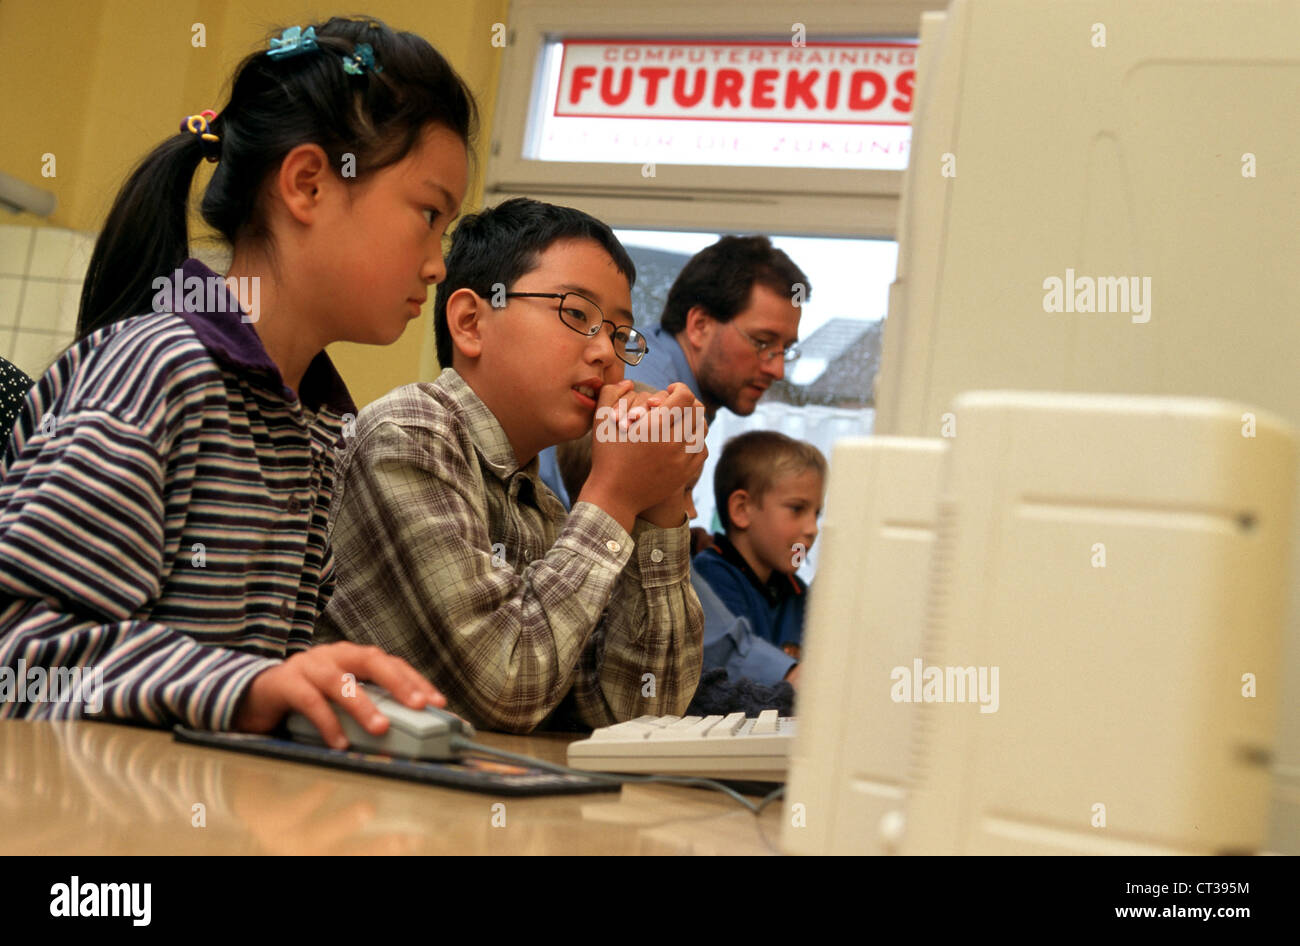 Future Kids, Computer Training for Children Stock Photo